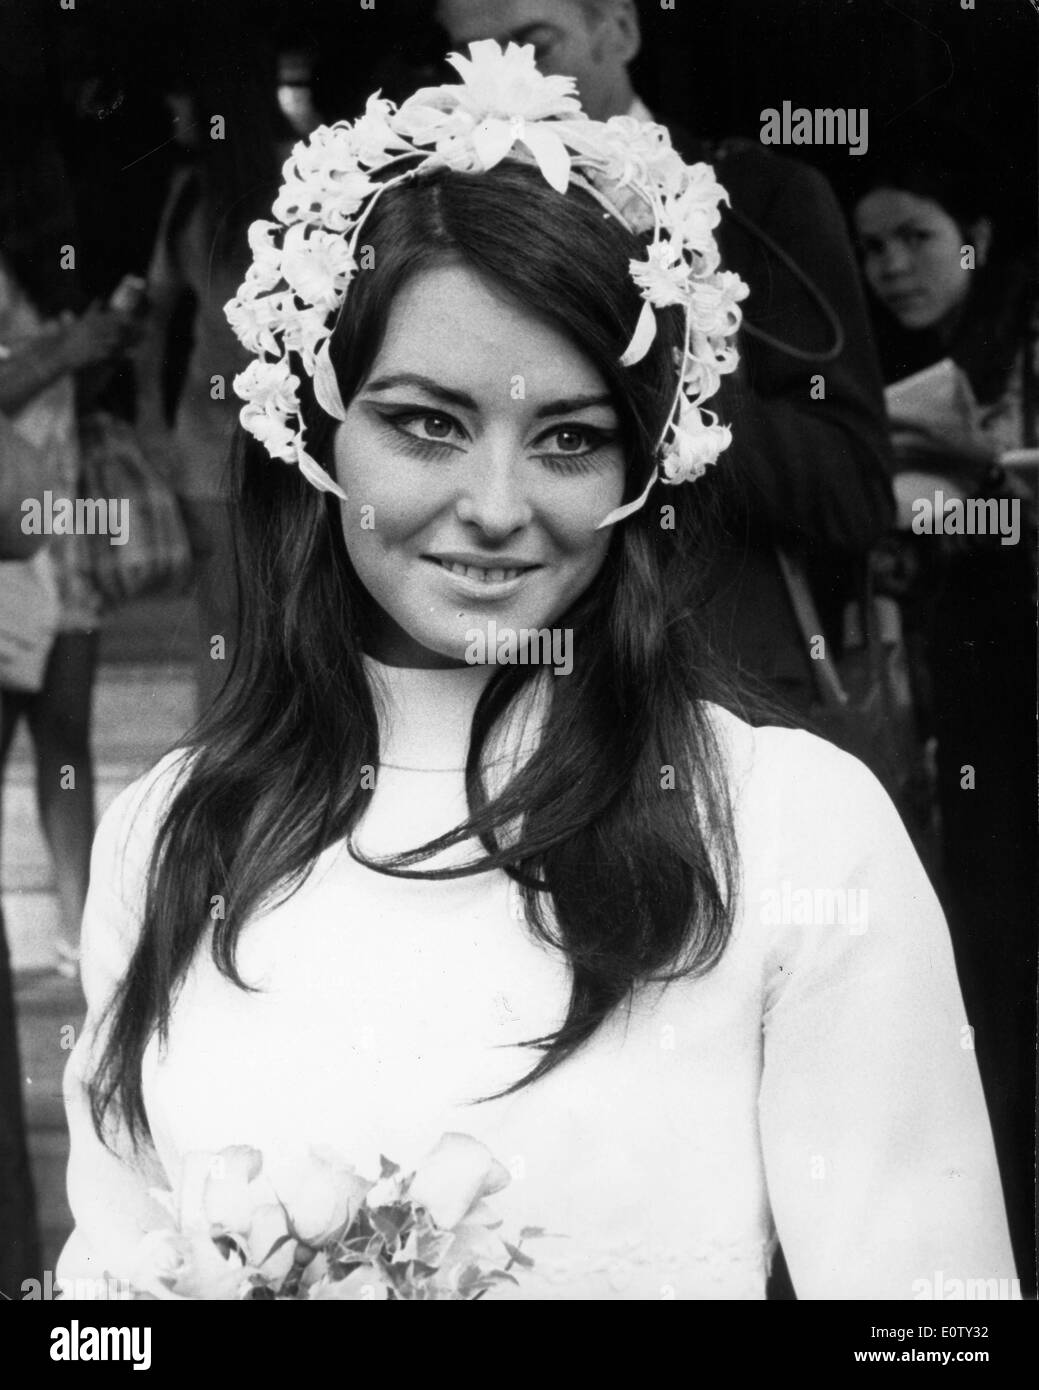 Former Miss Edinburgh, LINDA GRAY, on her wedding day to musician Barry Gibb.  APRESS. Stock Photo